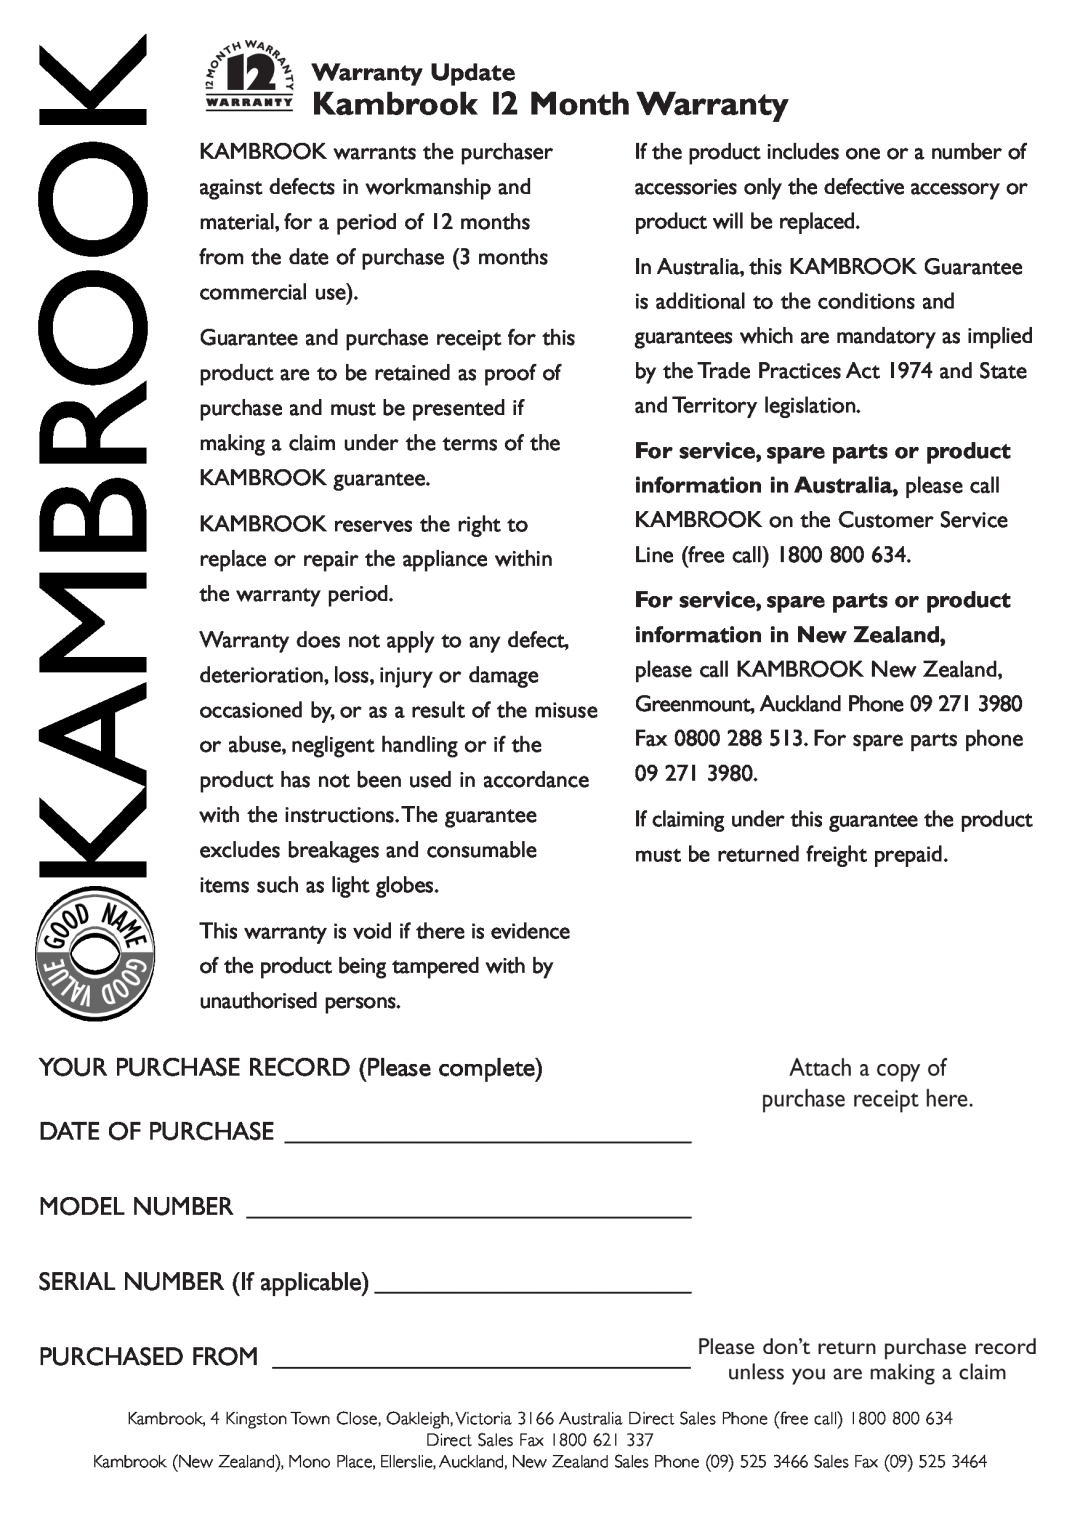 Kambrook KDL40, KDL30, KCL10 instruction manual Kambrook 12 Month Warranty, Warranty Update 